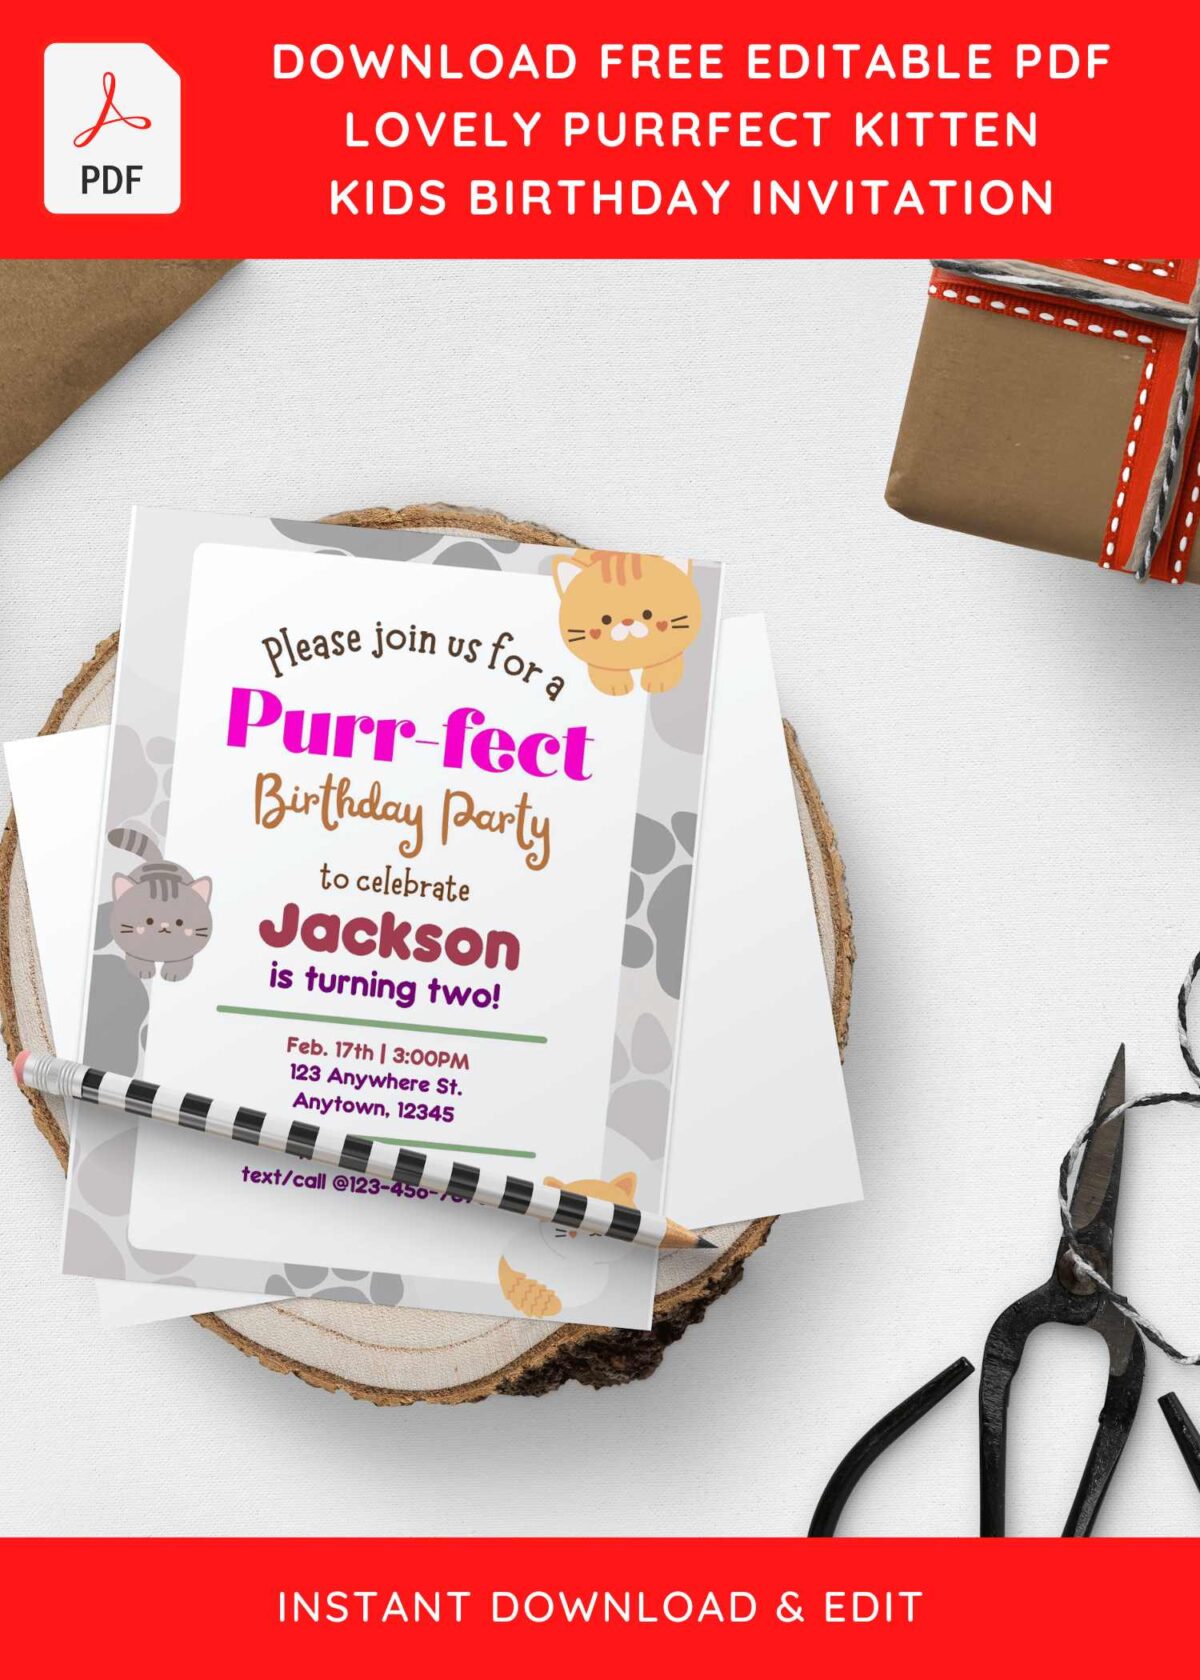 (Free Editable PDF) PURR-FECT Kitten Birthday Invitation Templates